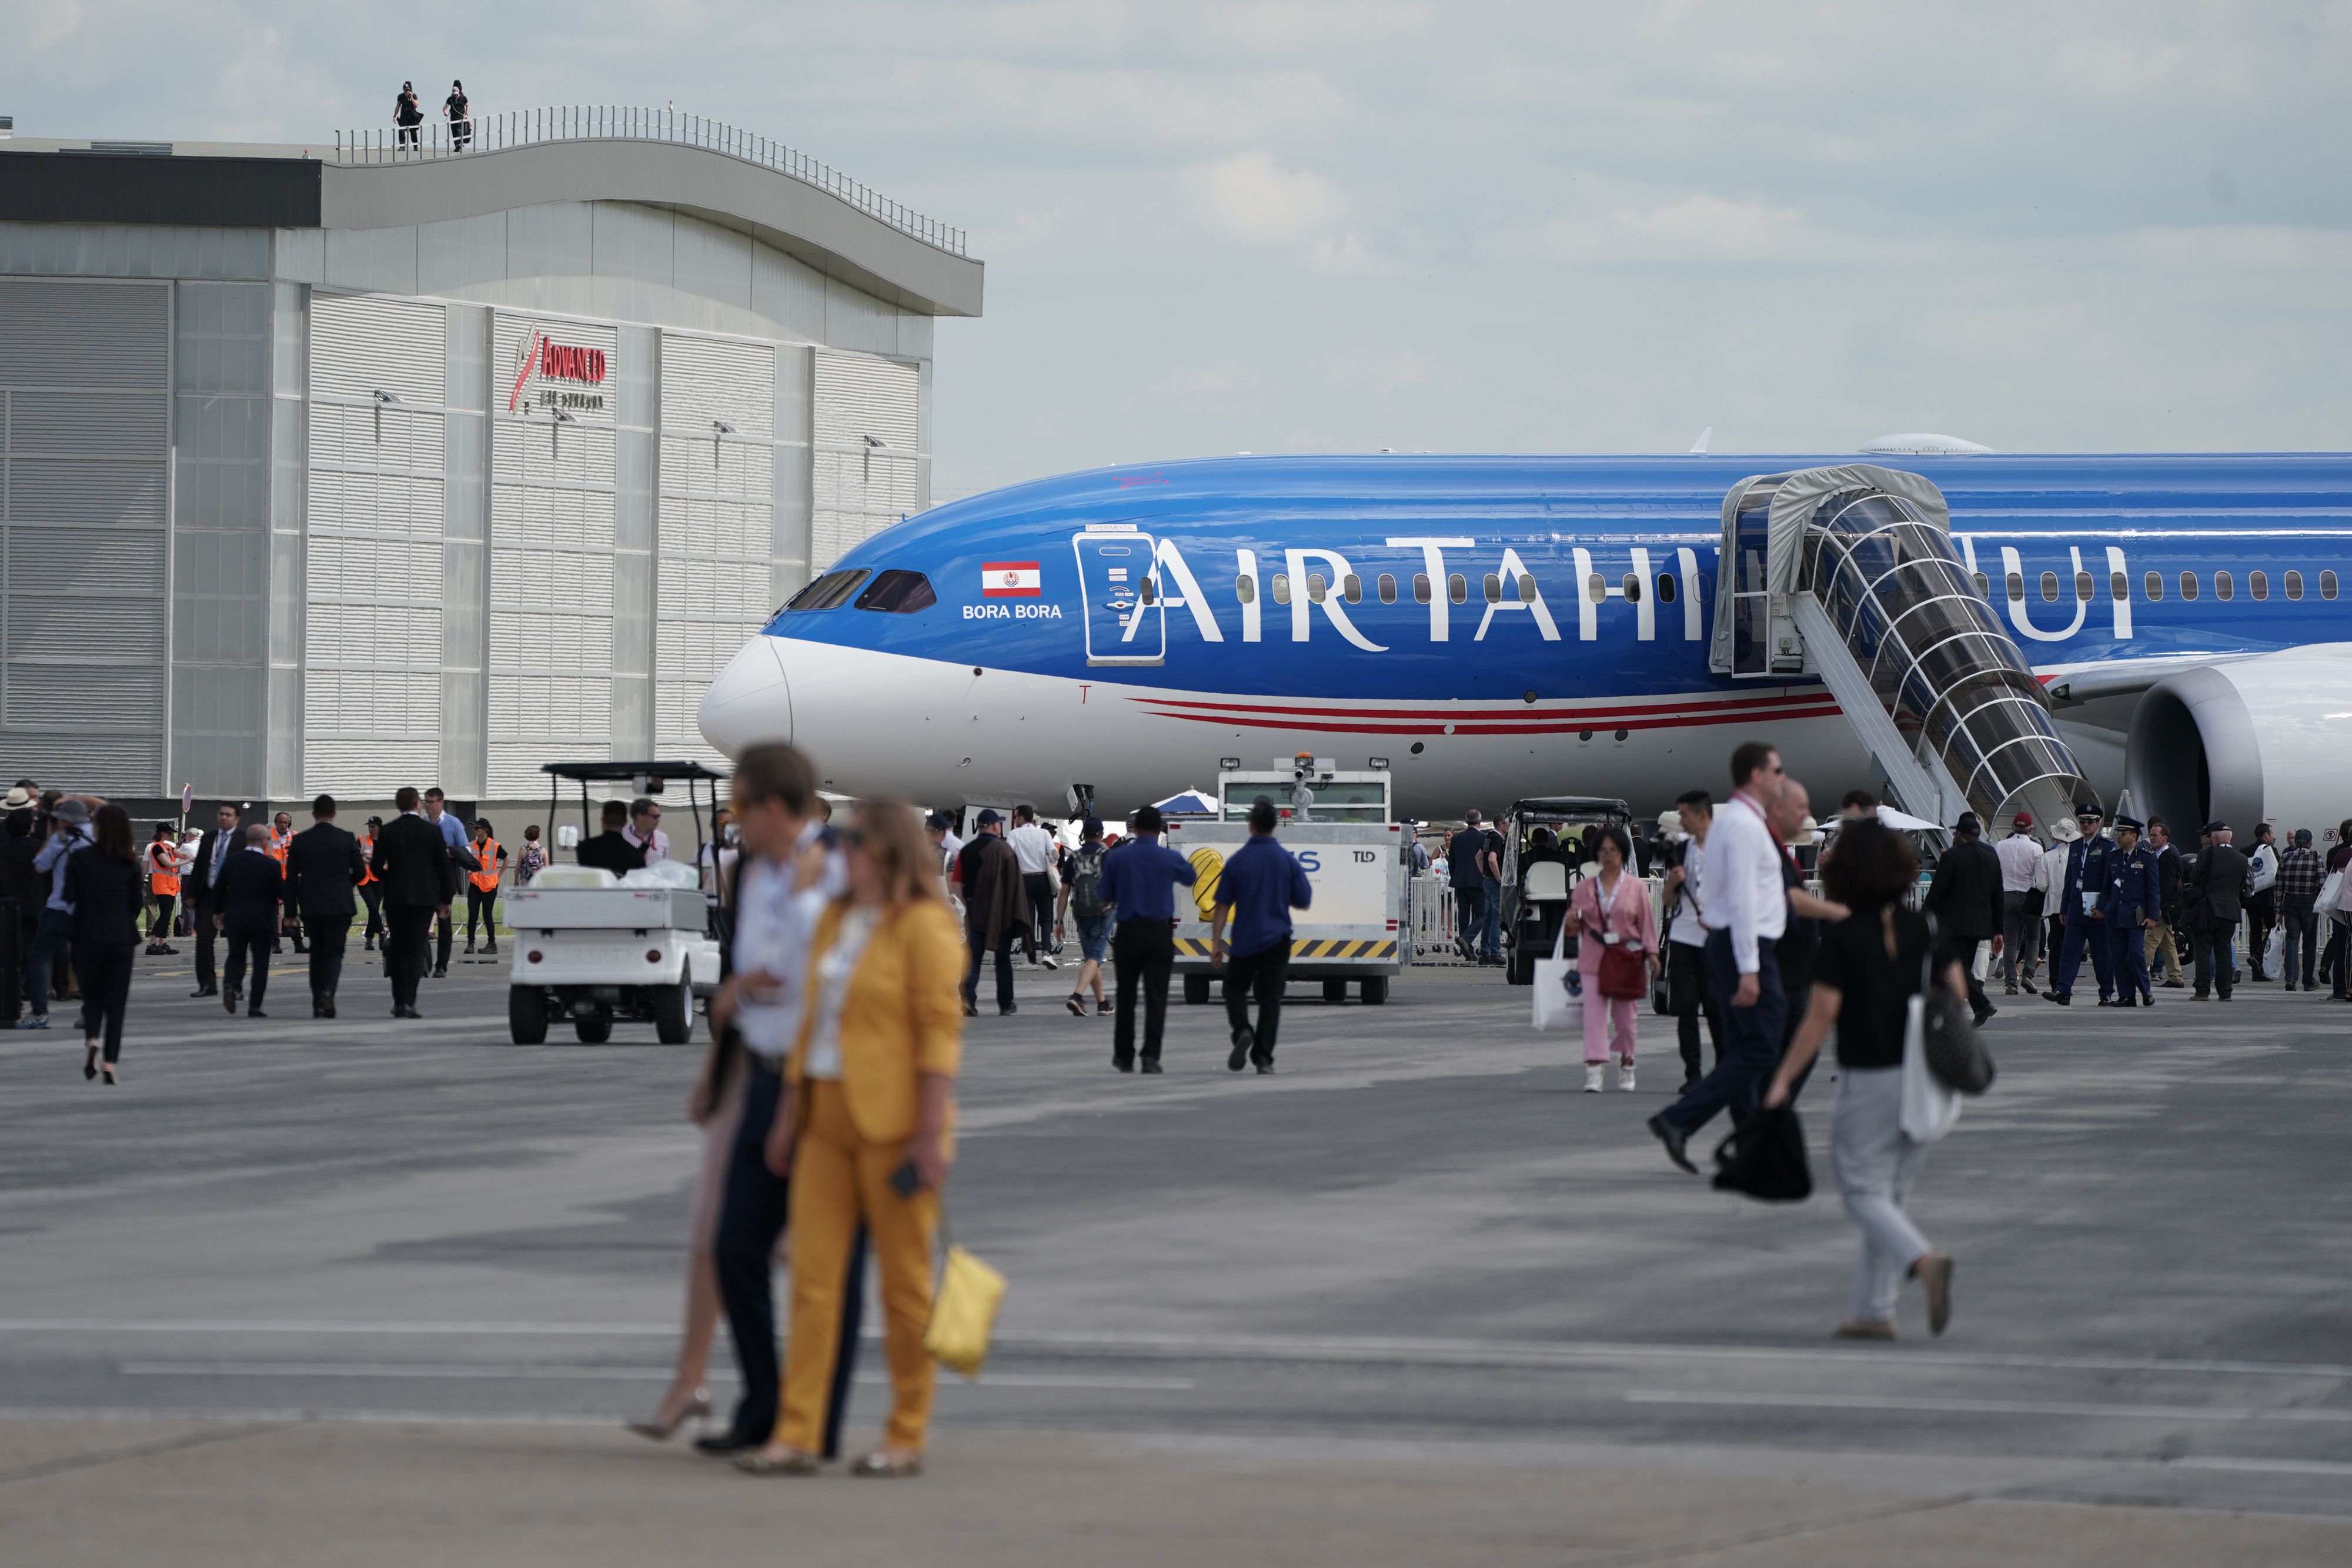 Boeing records zero new plane orders as Paris Air Show starts slow